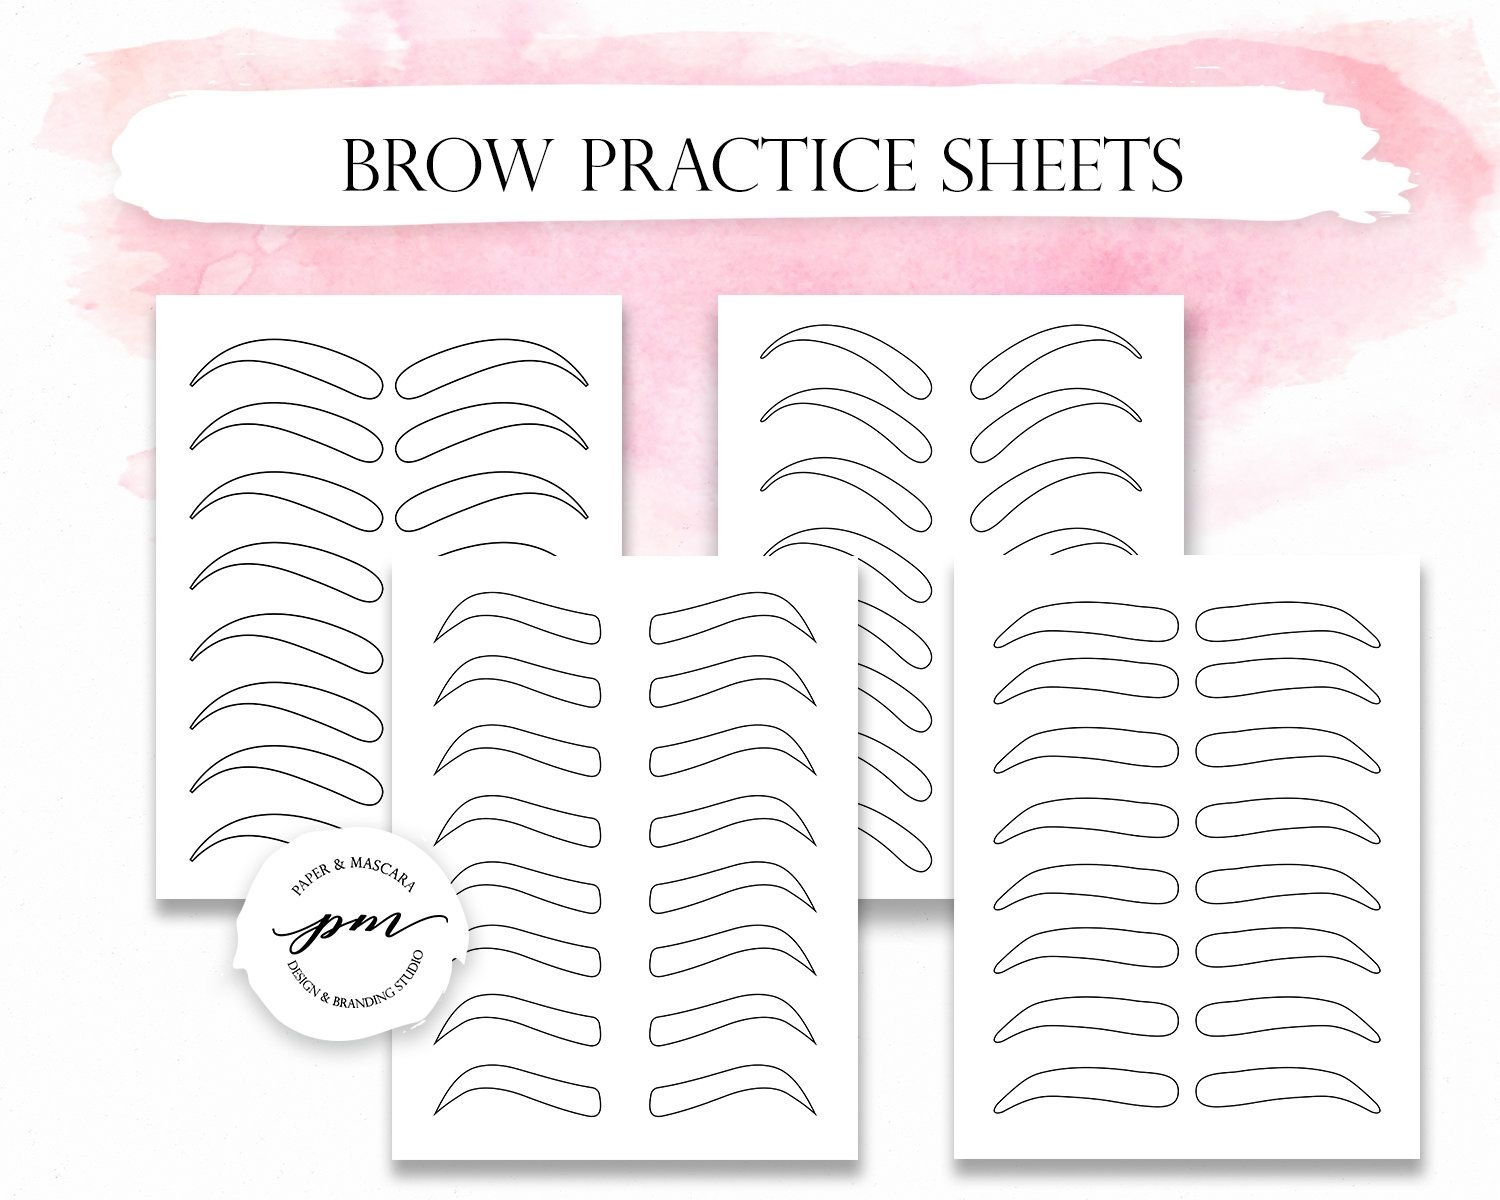 Brow Practice Sheets Eyebrow Microblading Practice Sheets Microshading Practice Sheets Etsy Microblading Eyebrows Brows Microblading